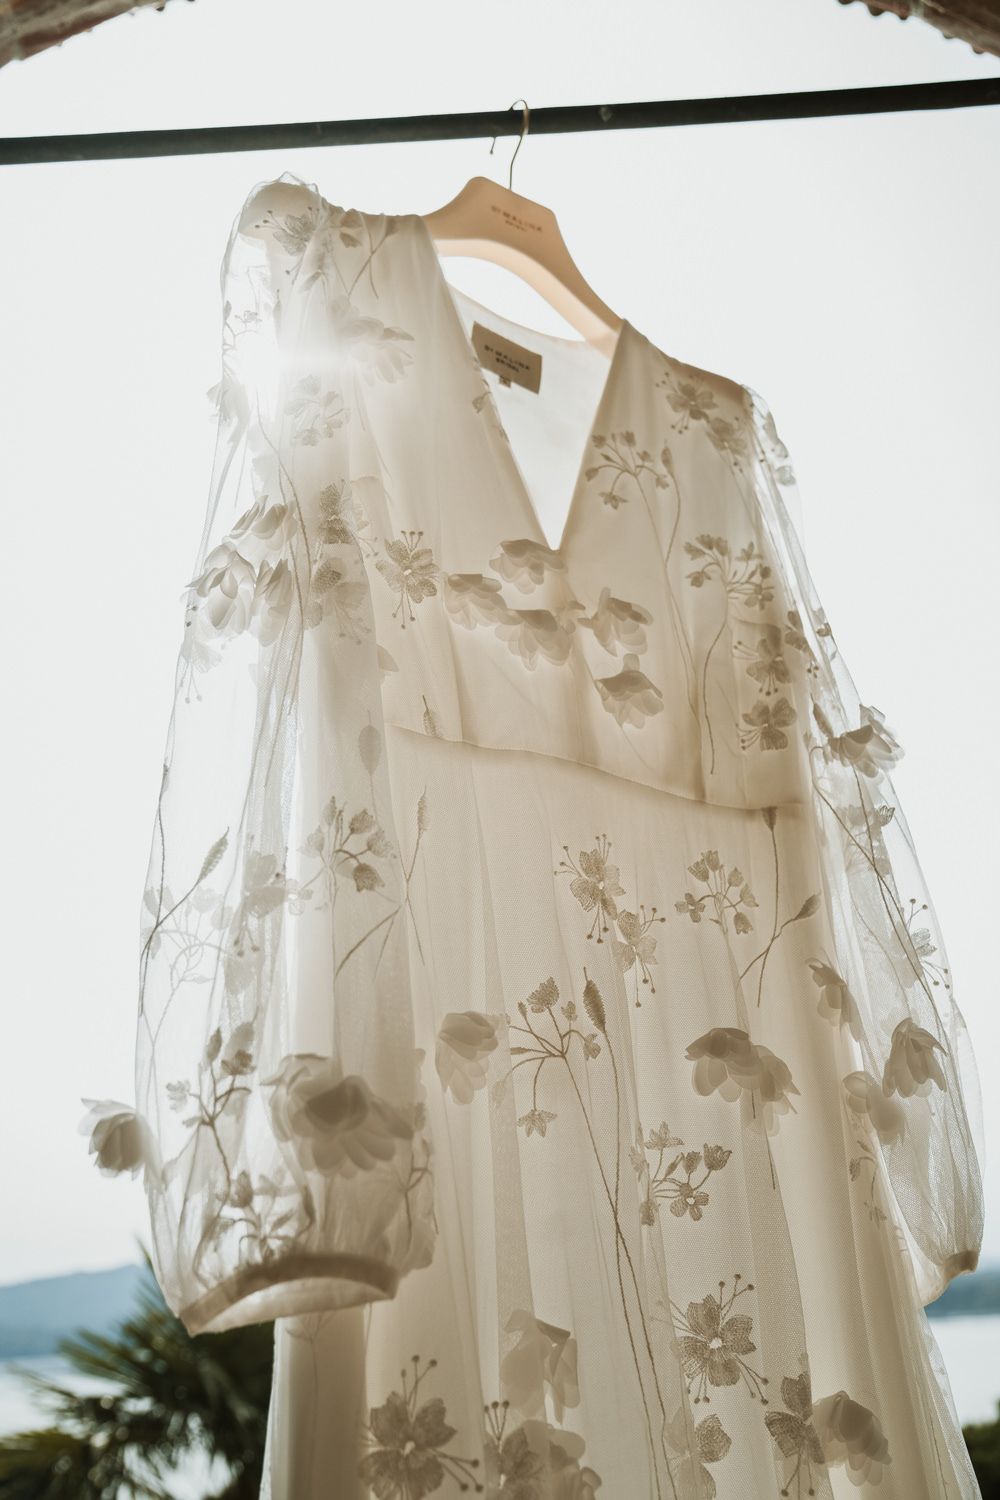 13 Refreshing & Ladylike Carol Lace Dress Outfit Ideas